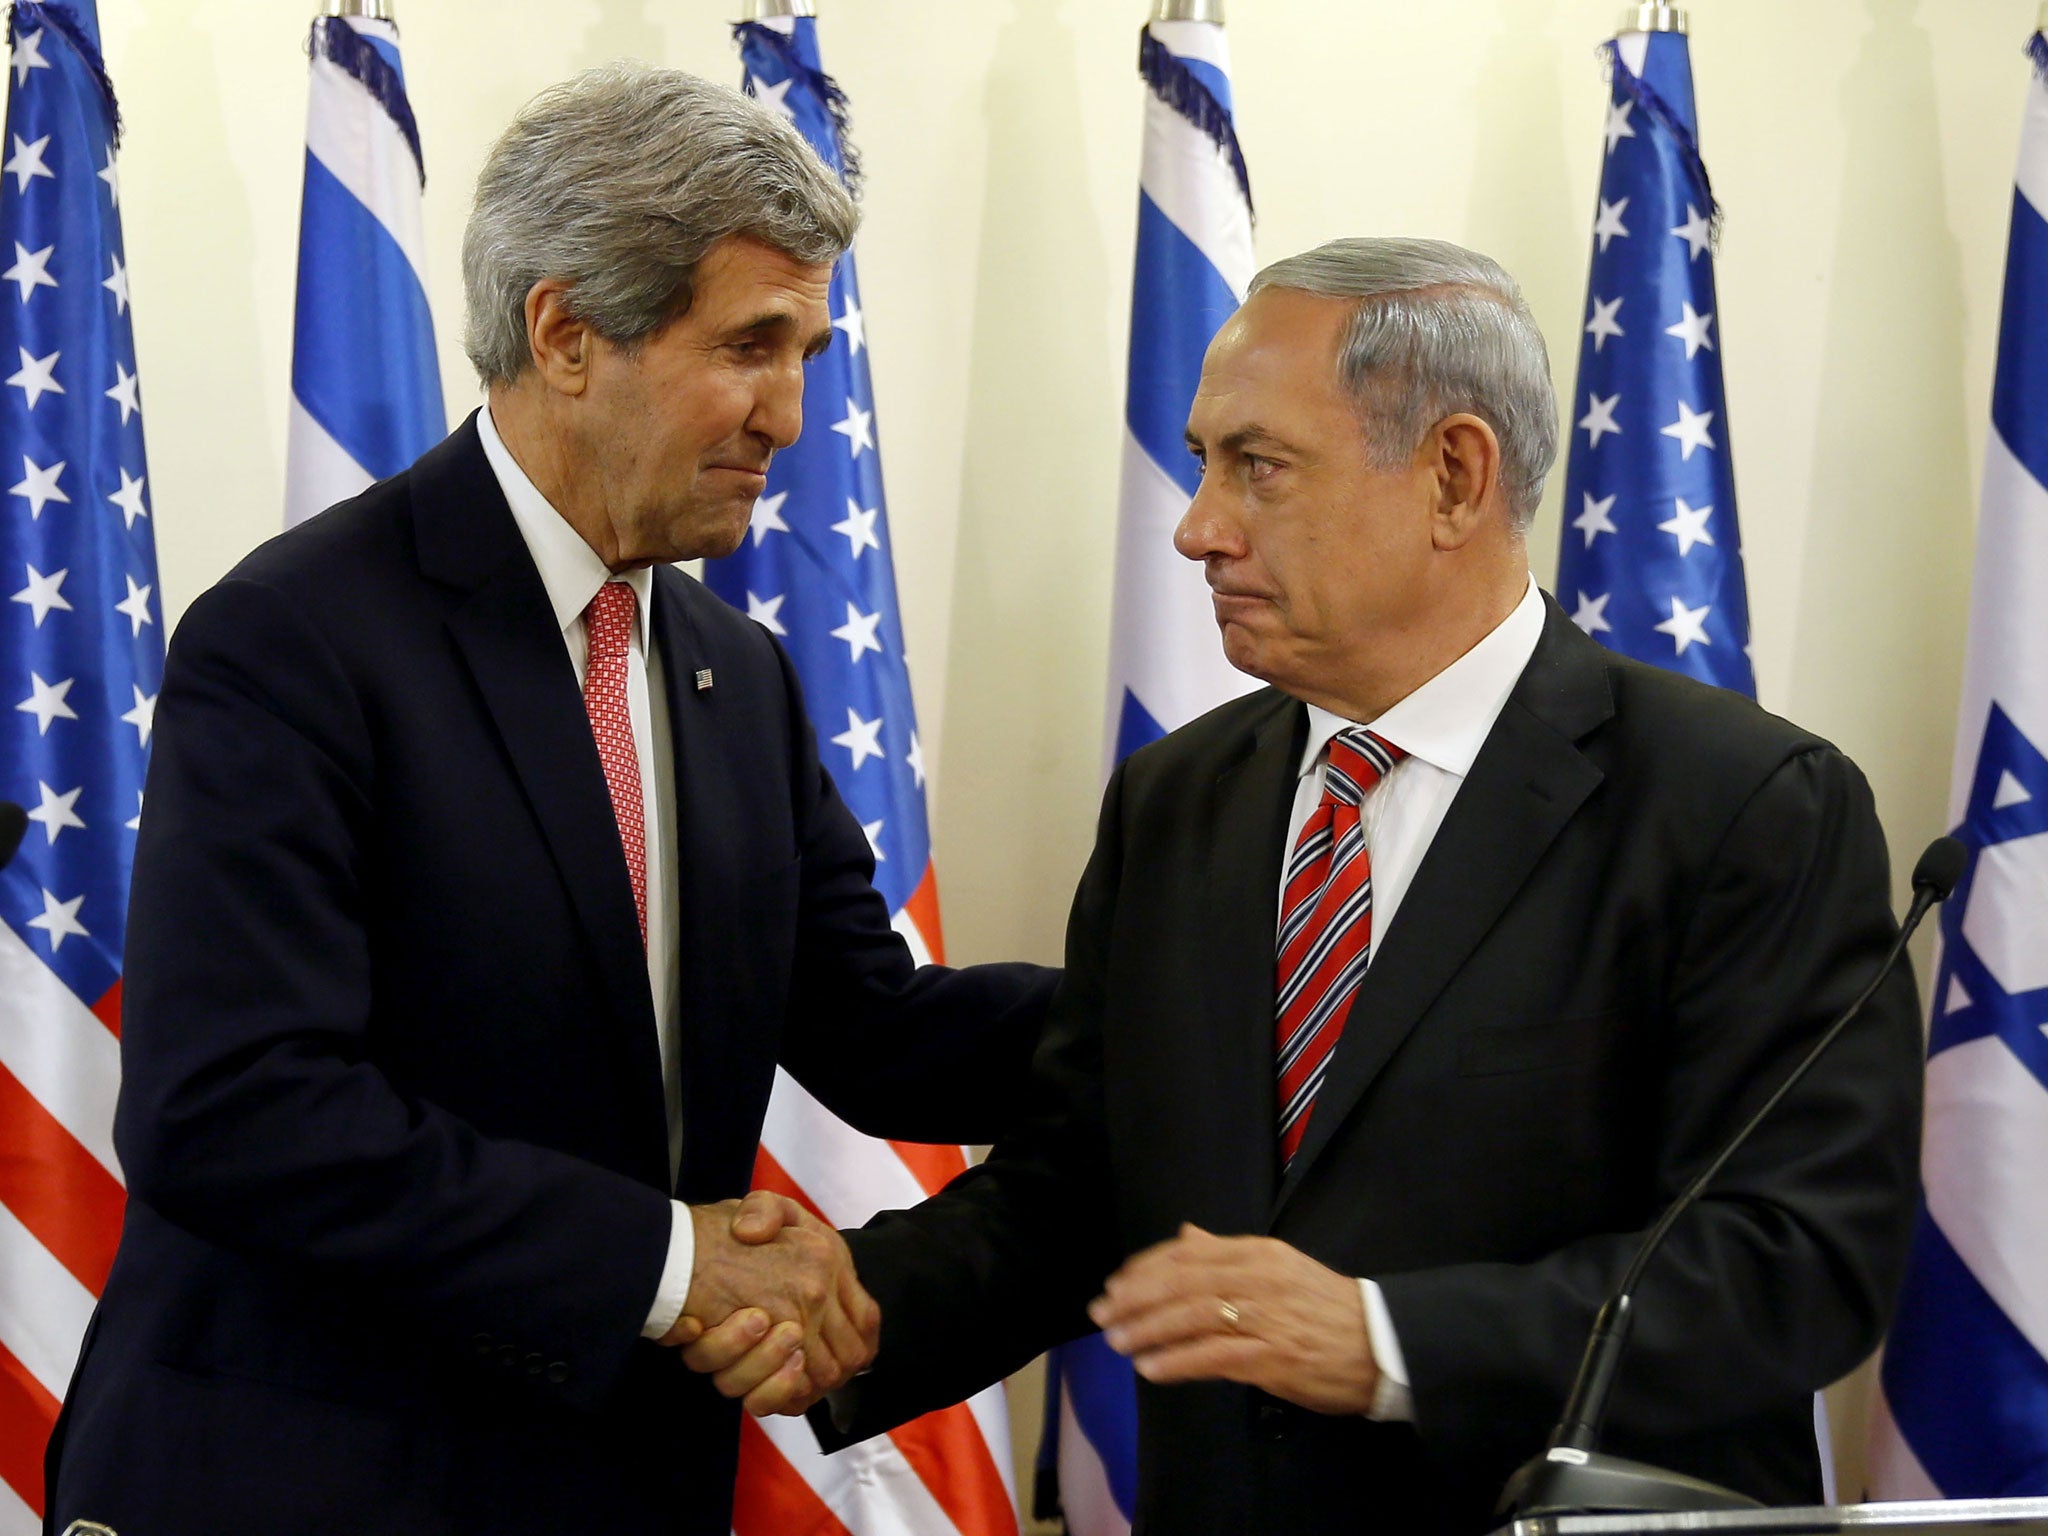 Israeli Prime Minister Benjamin Netanyahu shakes John Kerry's hand